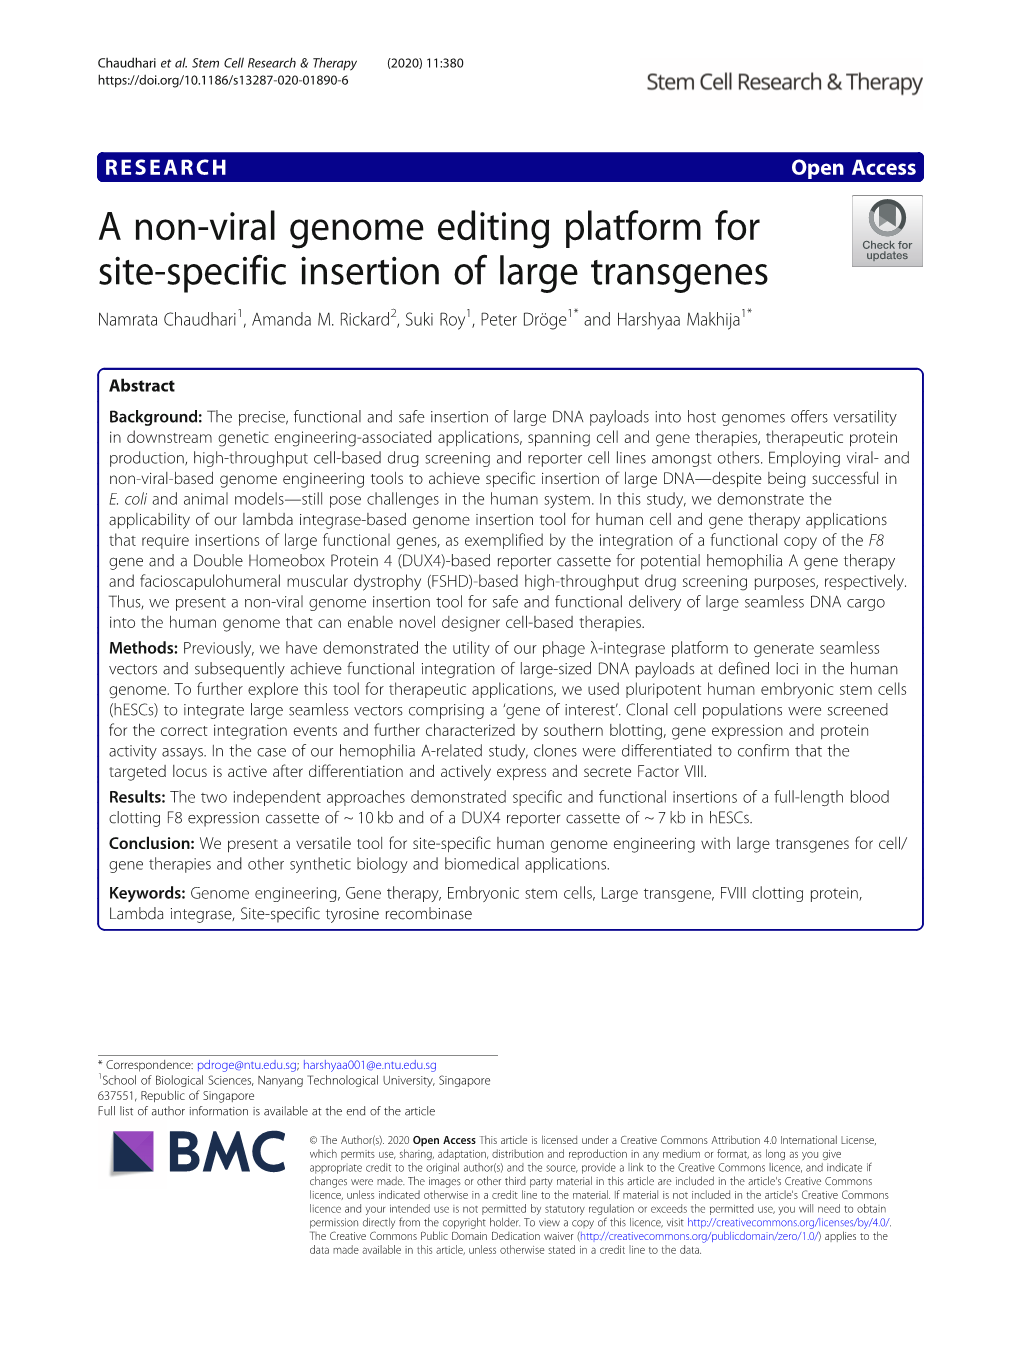 A Non-Viral Genome Editing Platform for Site-Specific Insertion of Large Transgenes Namrata Chaudhari1, Amanda M